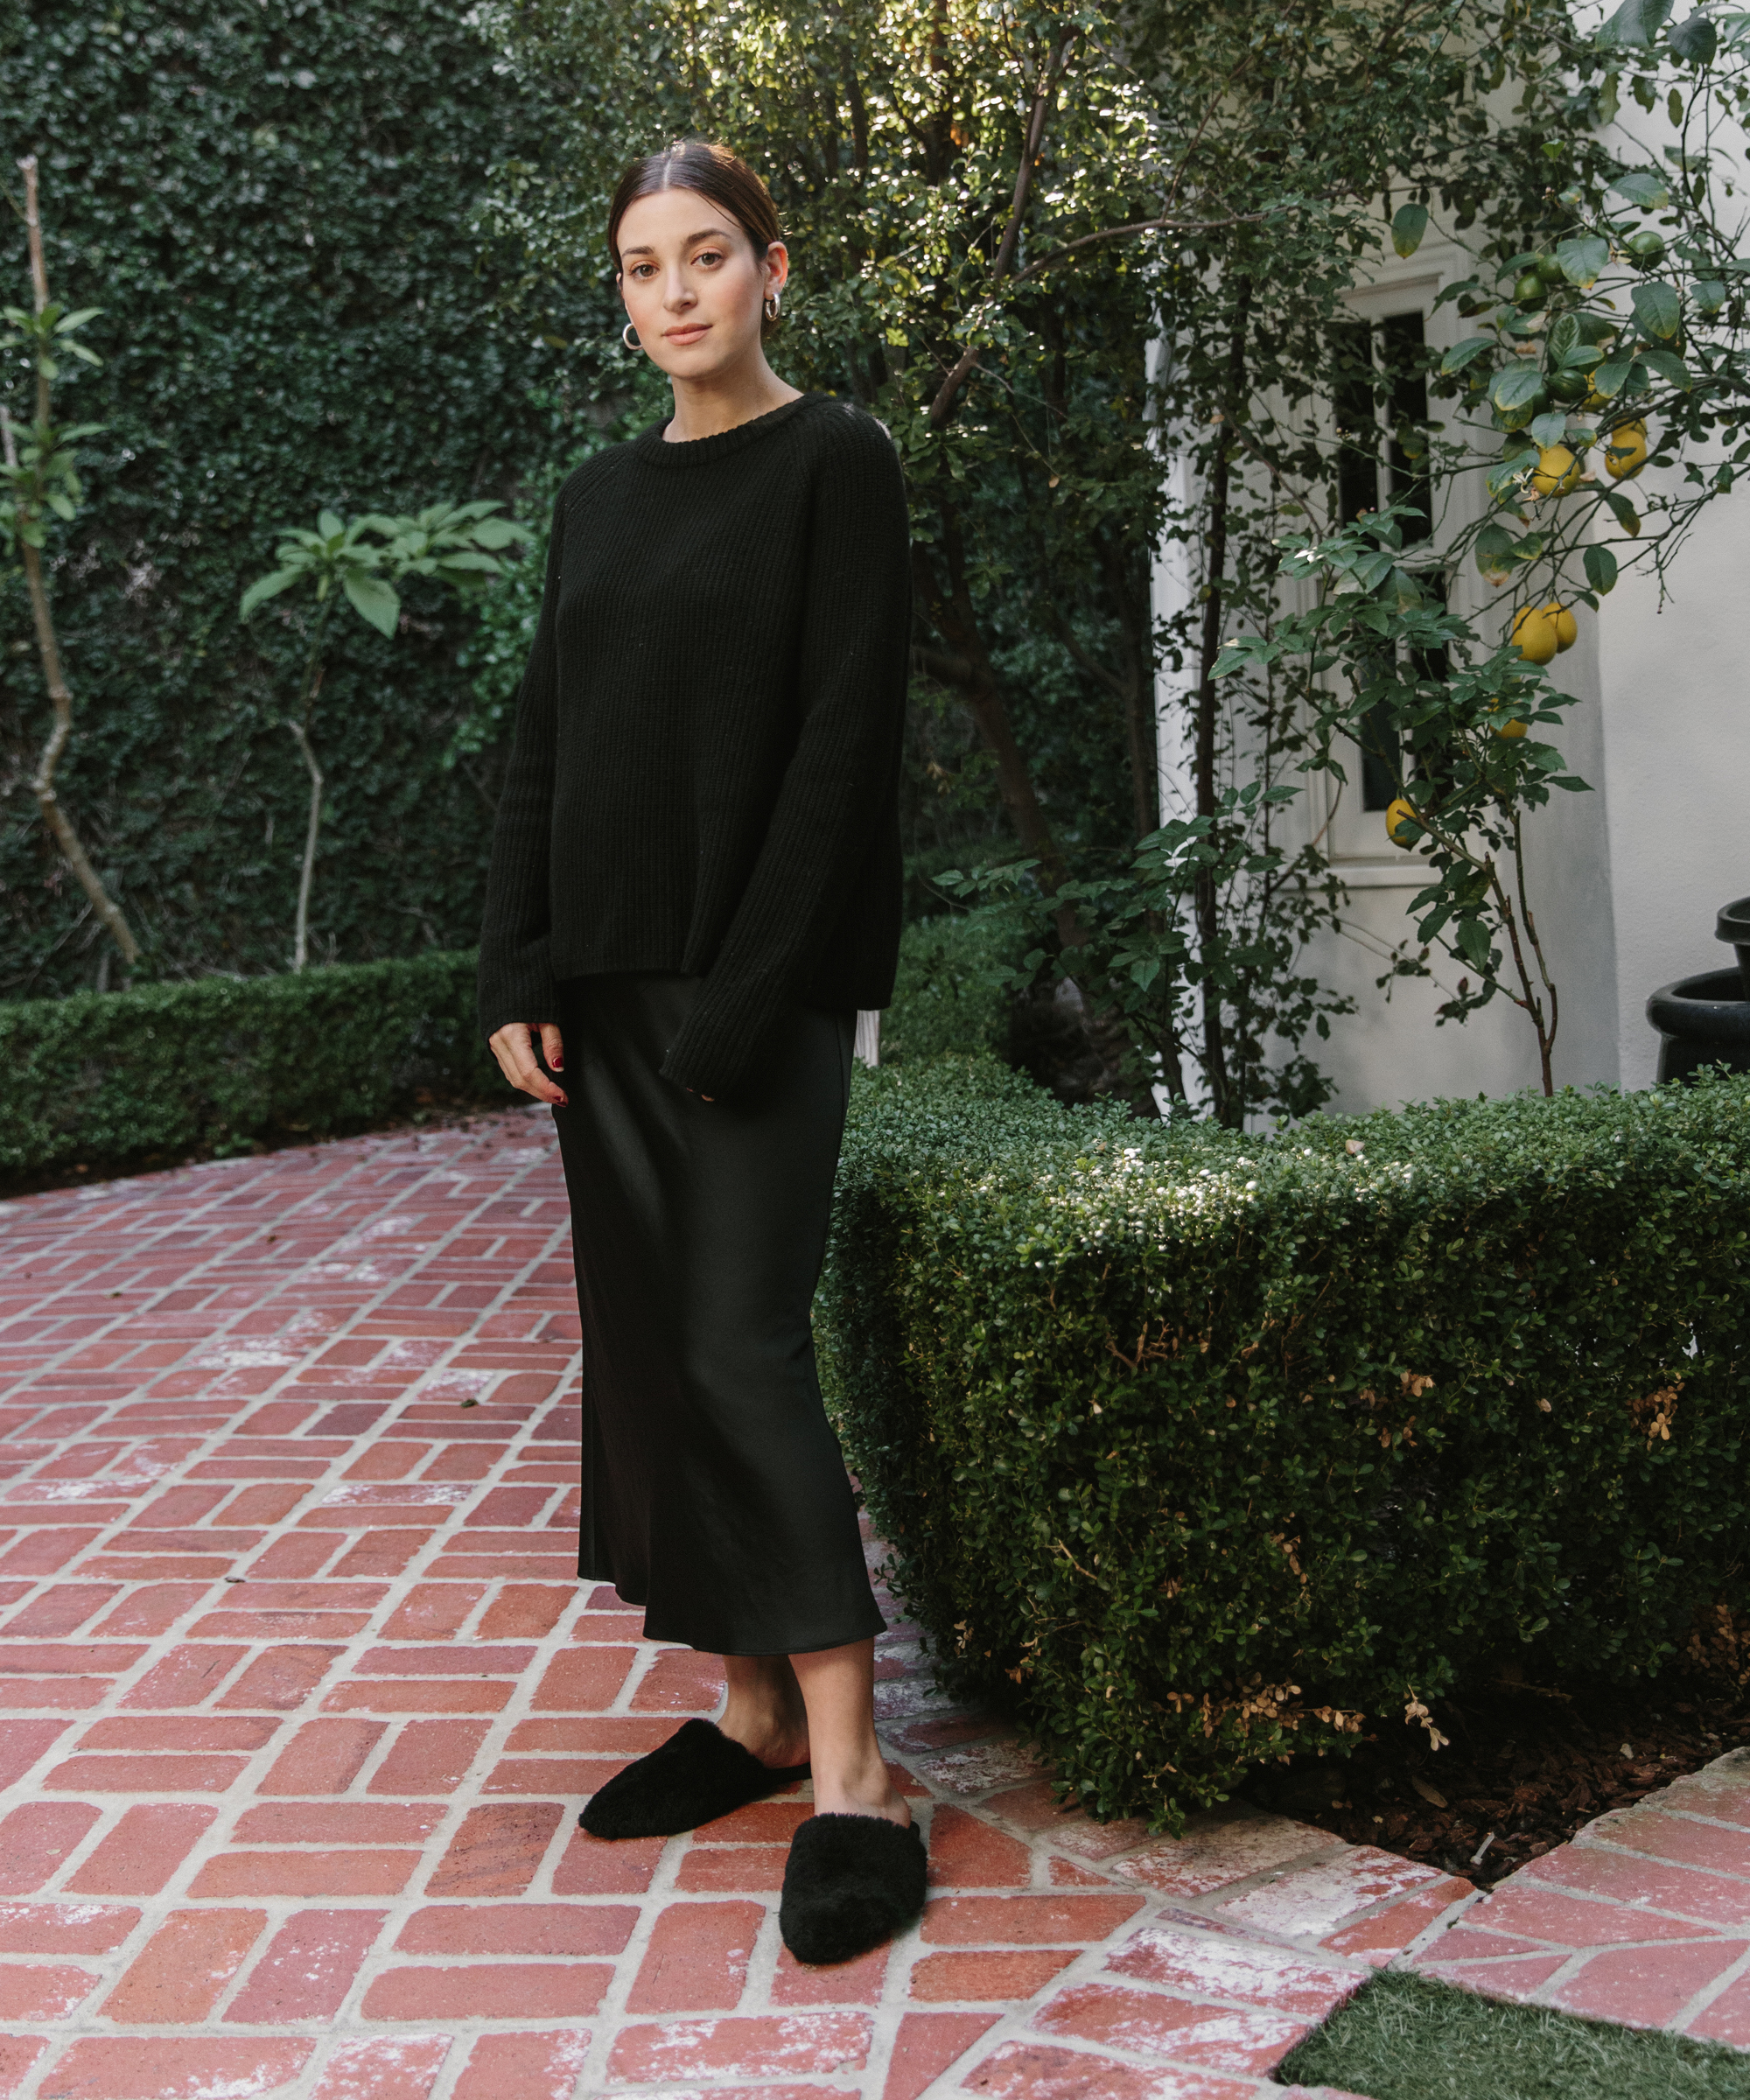 Jamie Mizrahi's Empowered Approach to Getting Dressed – Jenni Kayne